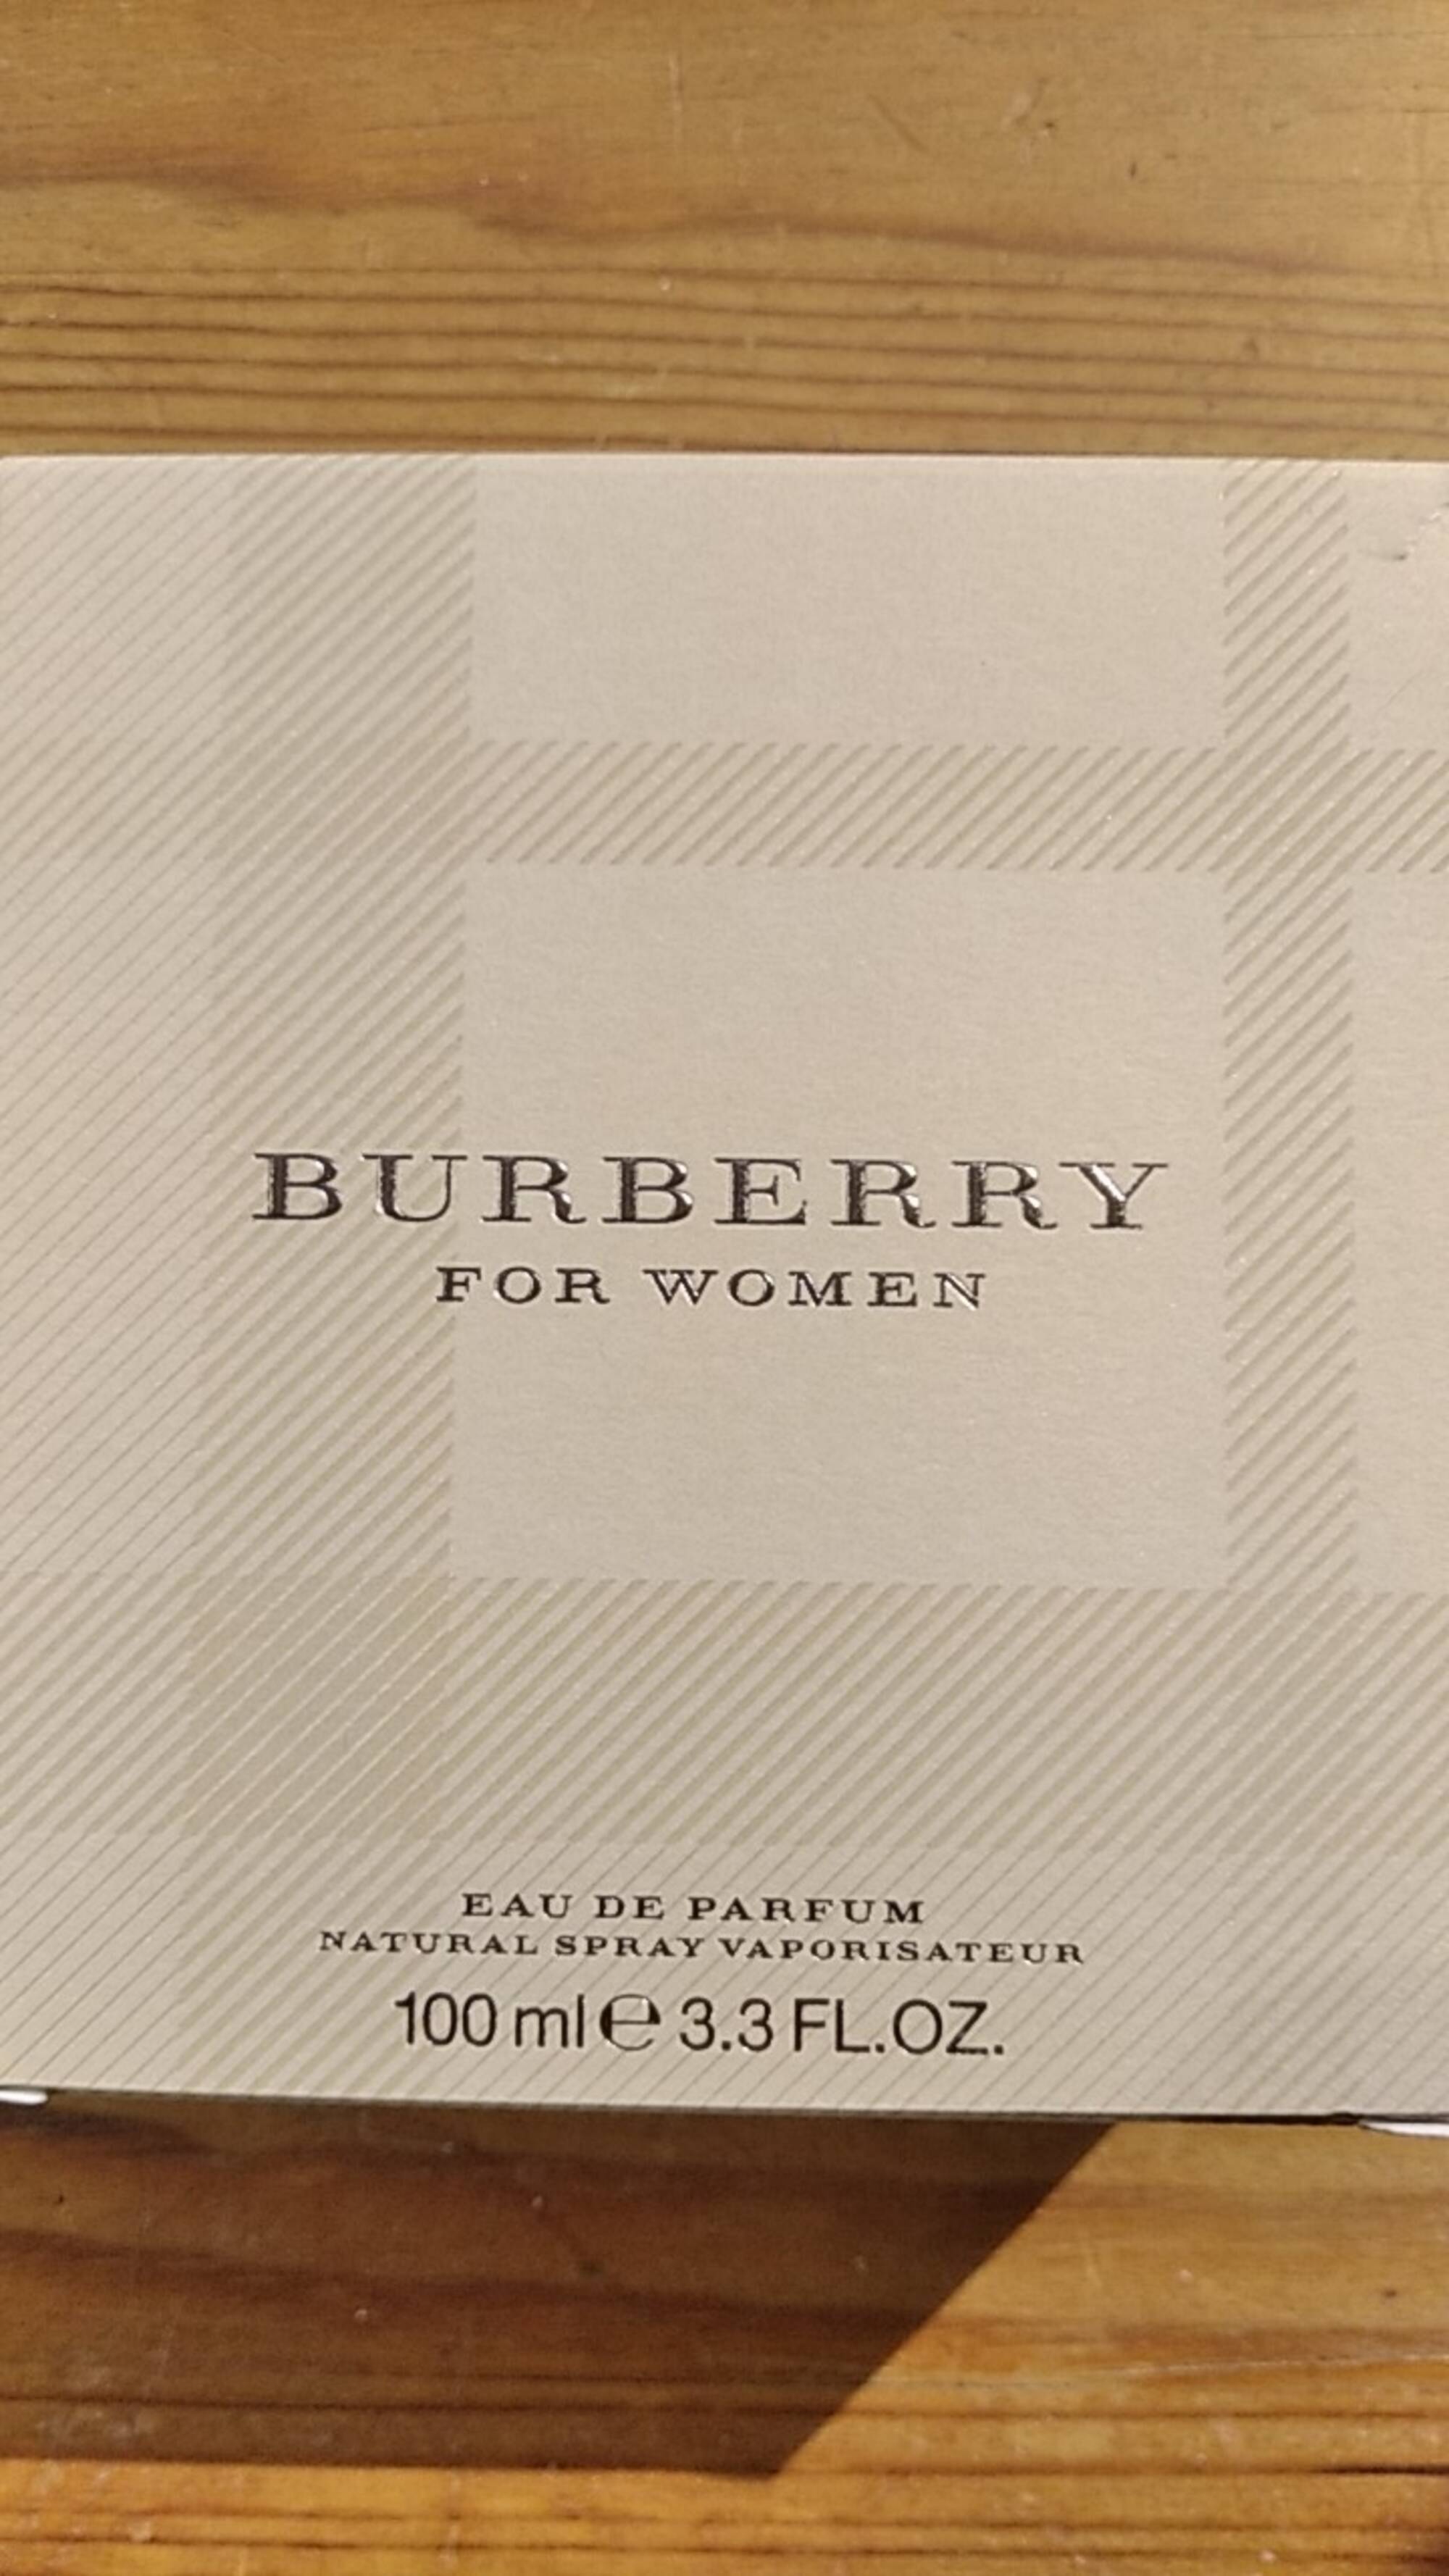 BURBERRY - Eau de parfum for women